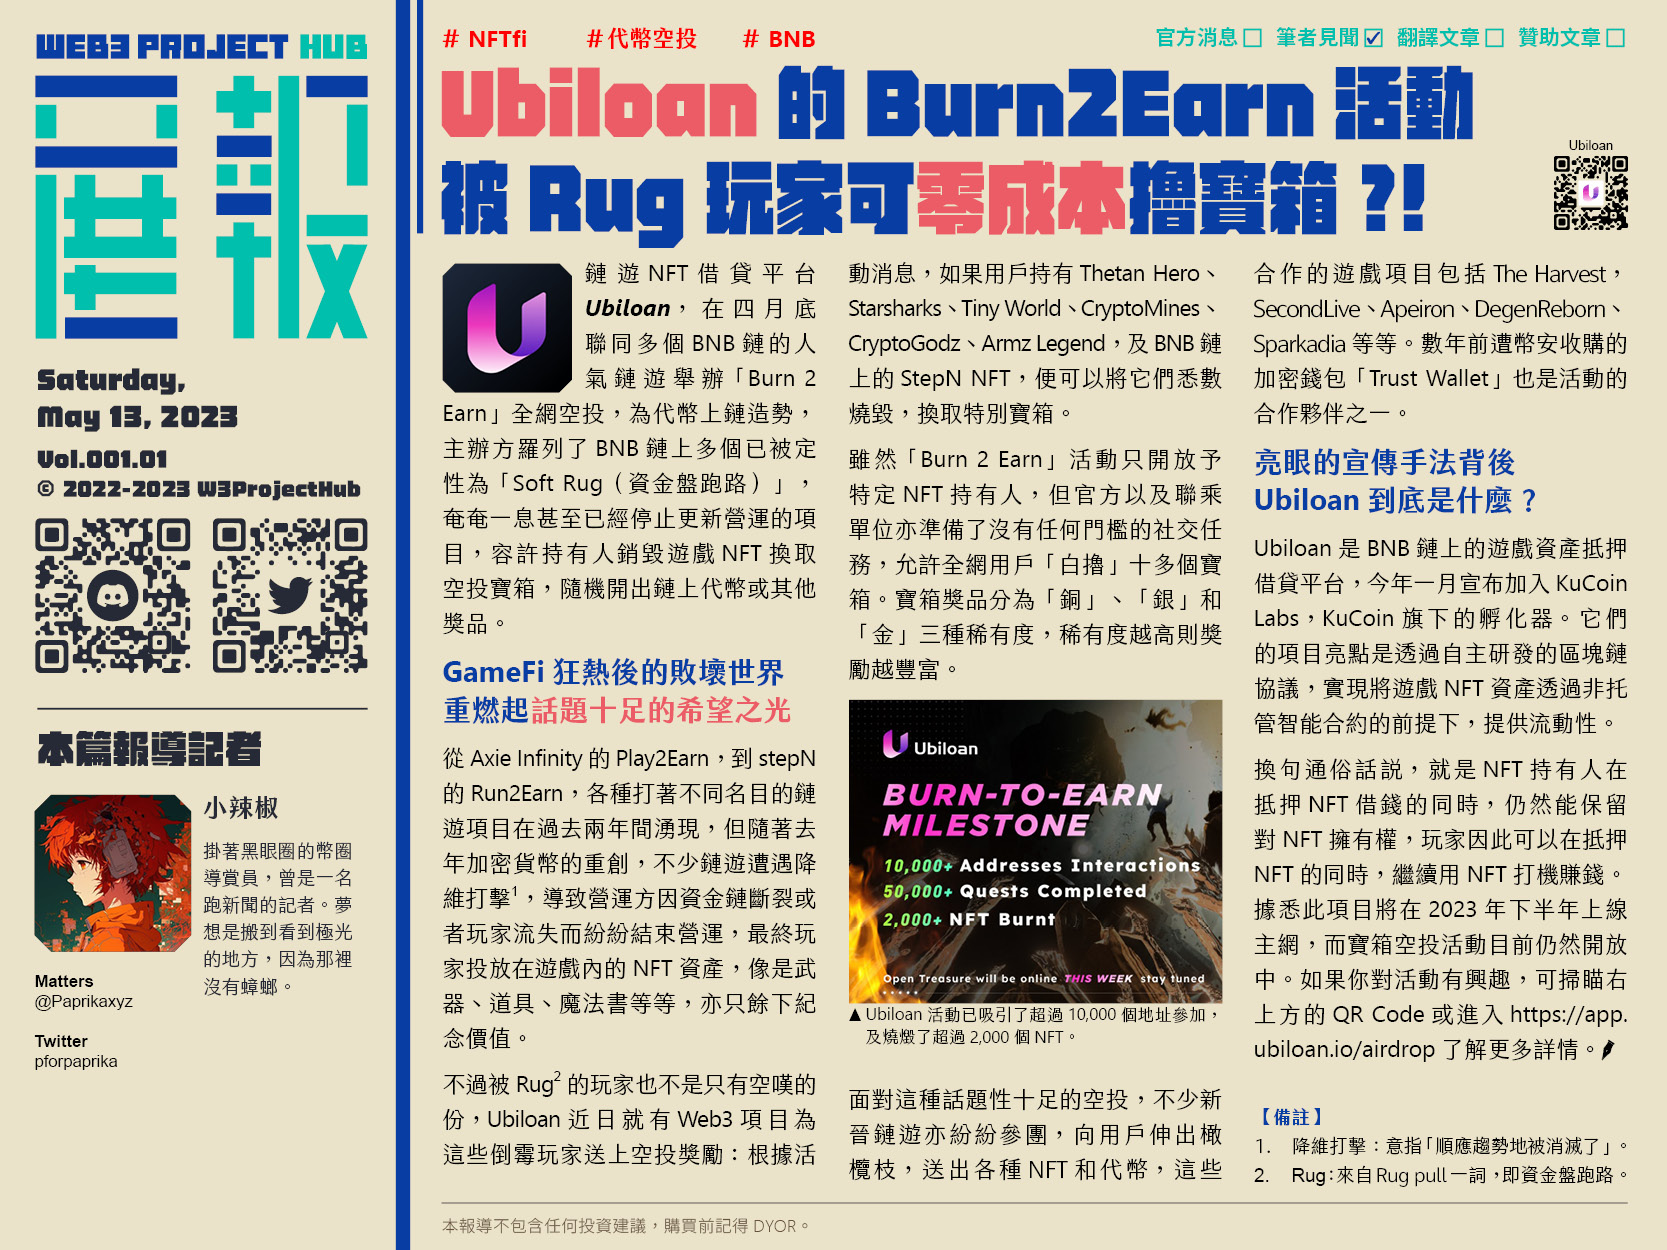  Ubiloan的Burn2Earn活動被Rug玩家可零成本擼寶箱?!